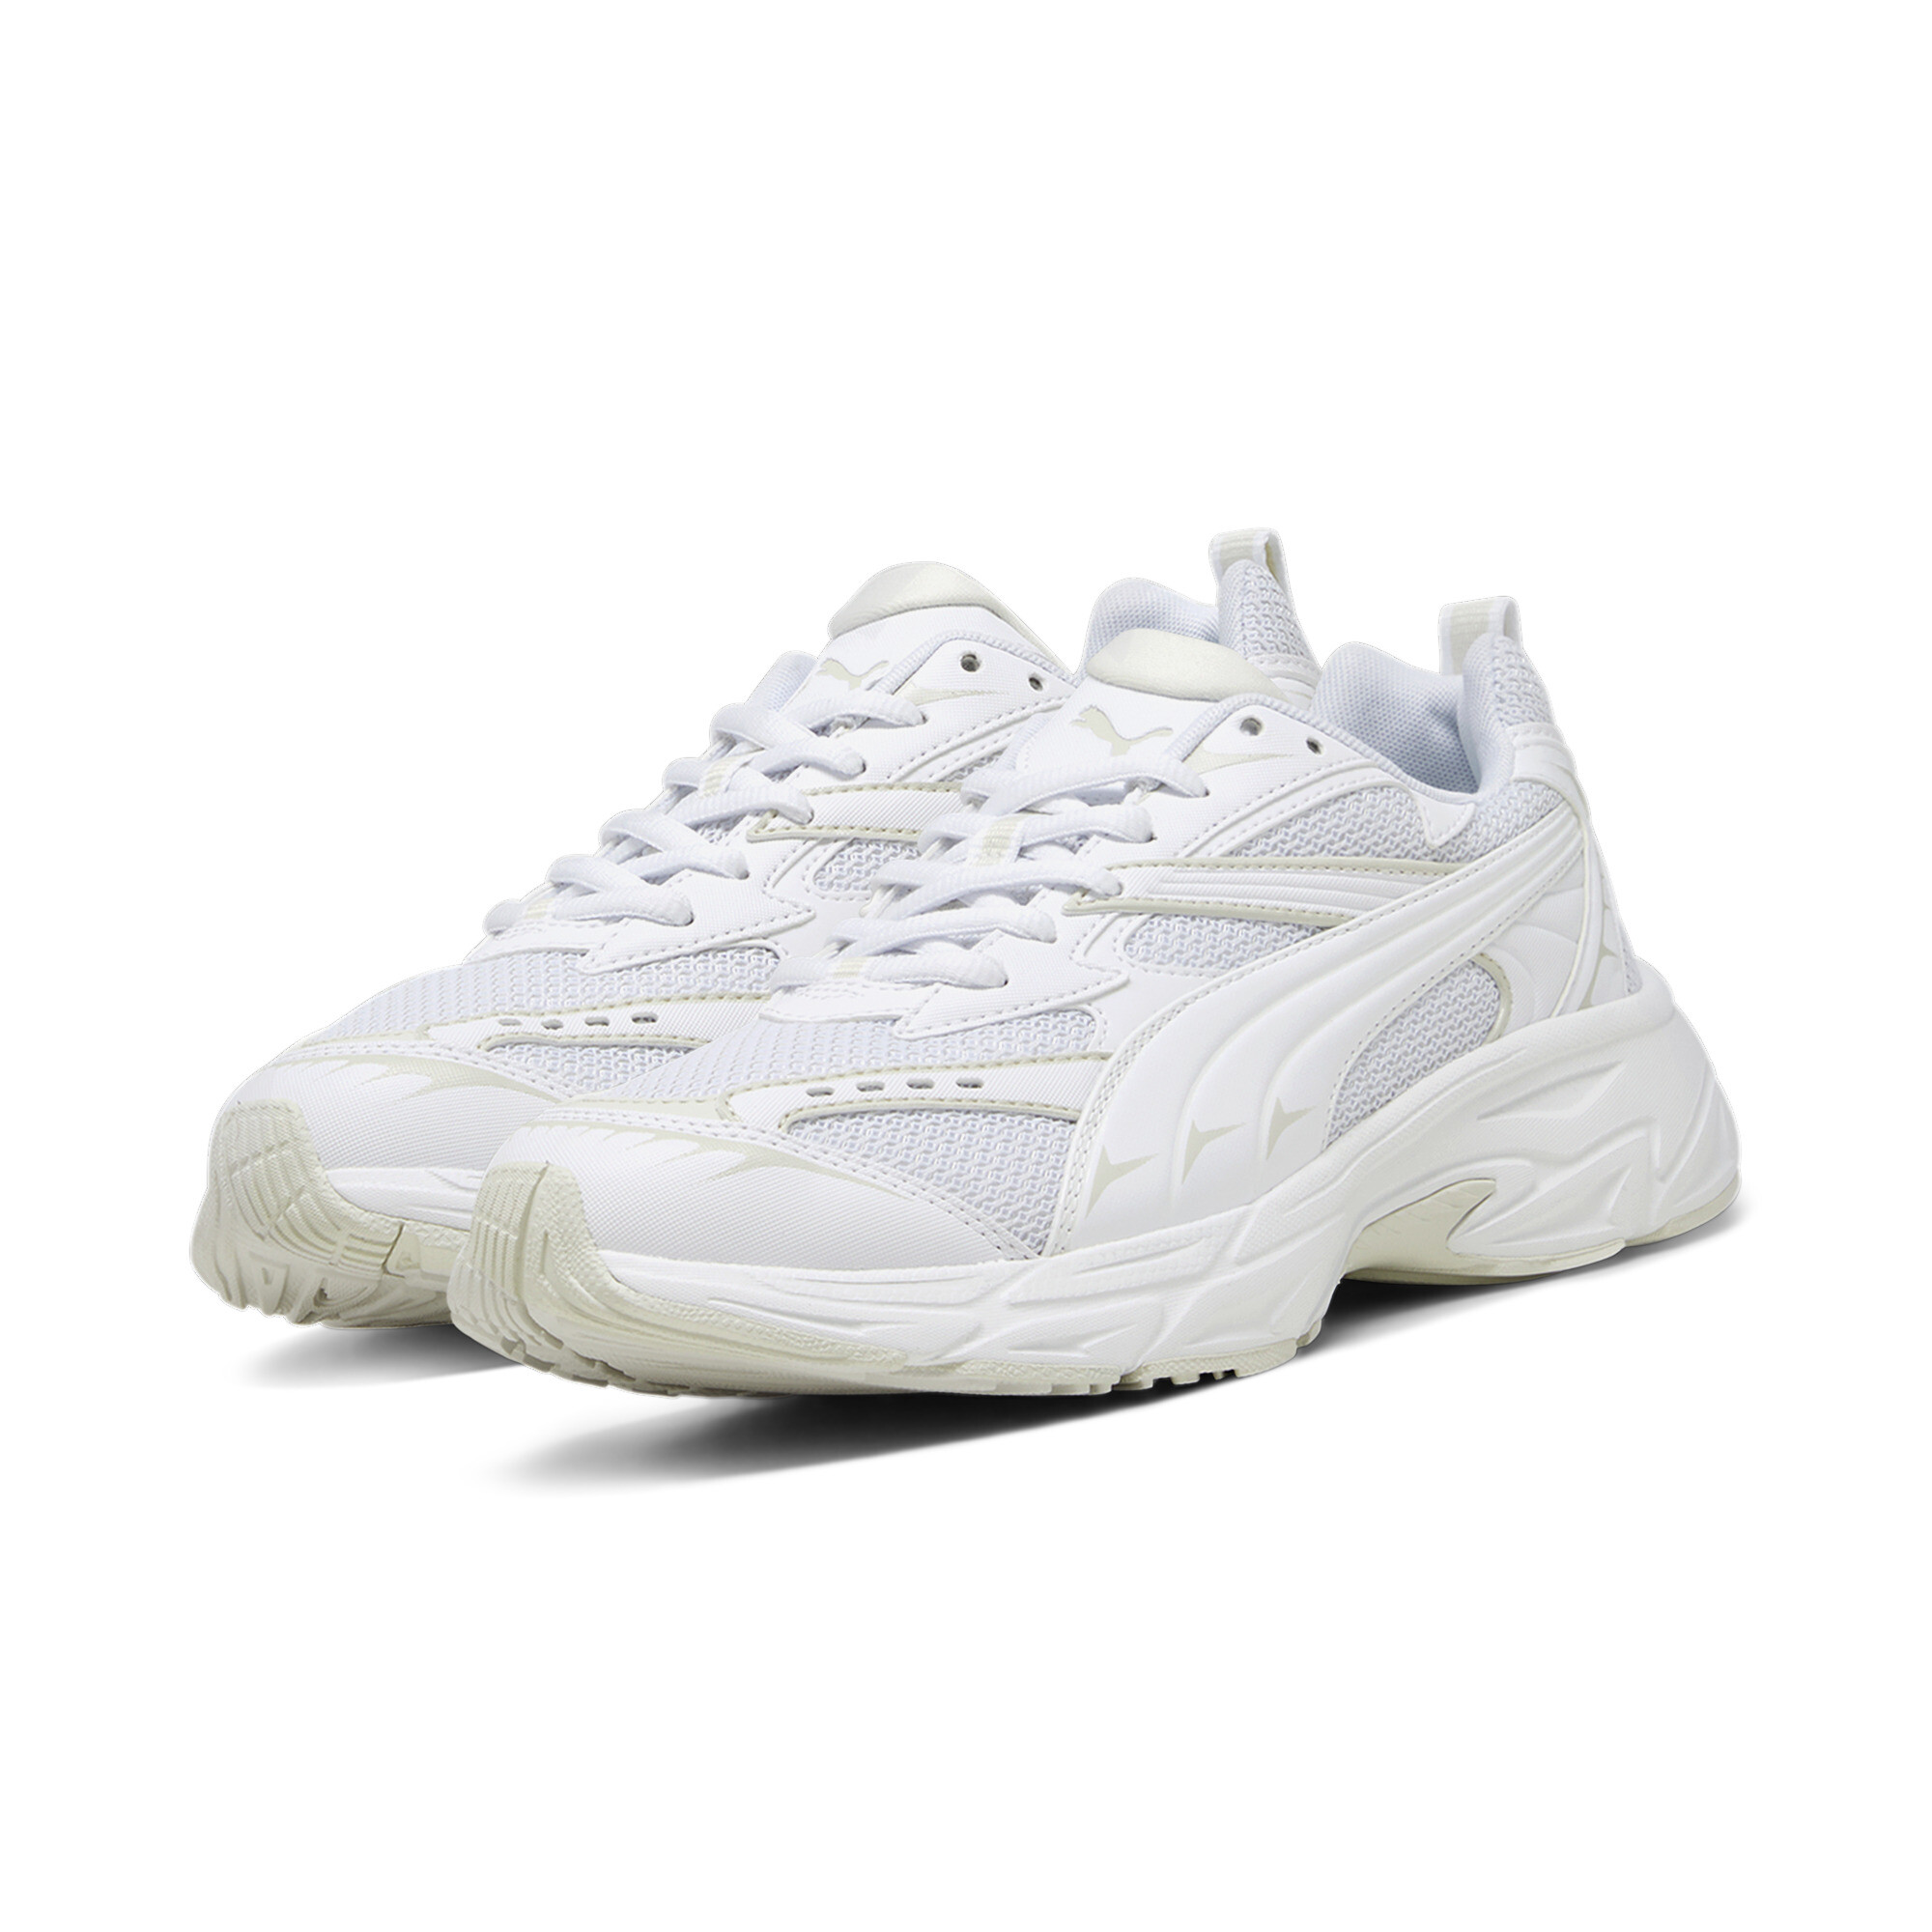 Men's PUMA Morphic Base Sneakers In White, Size EU 40.5